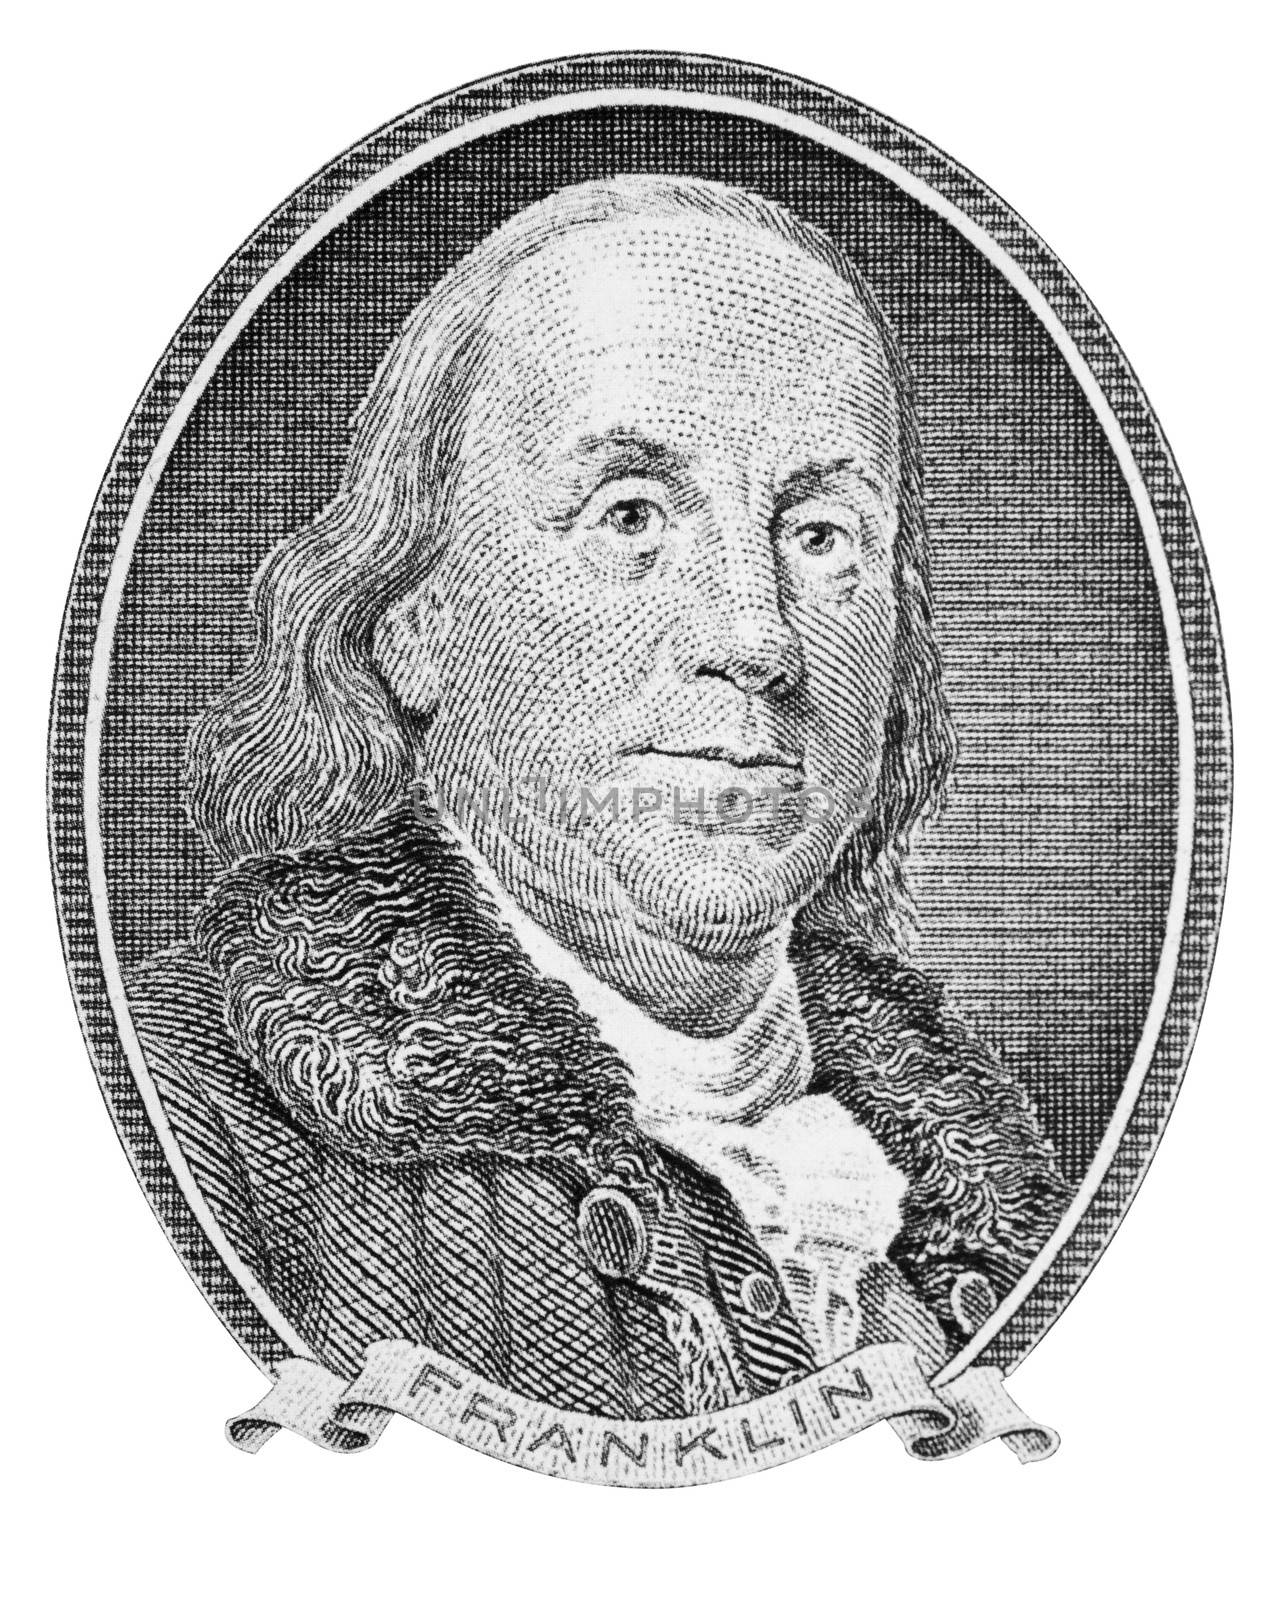 Benjamin Franklin by only4denn